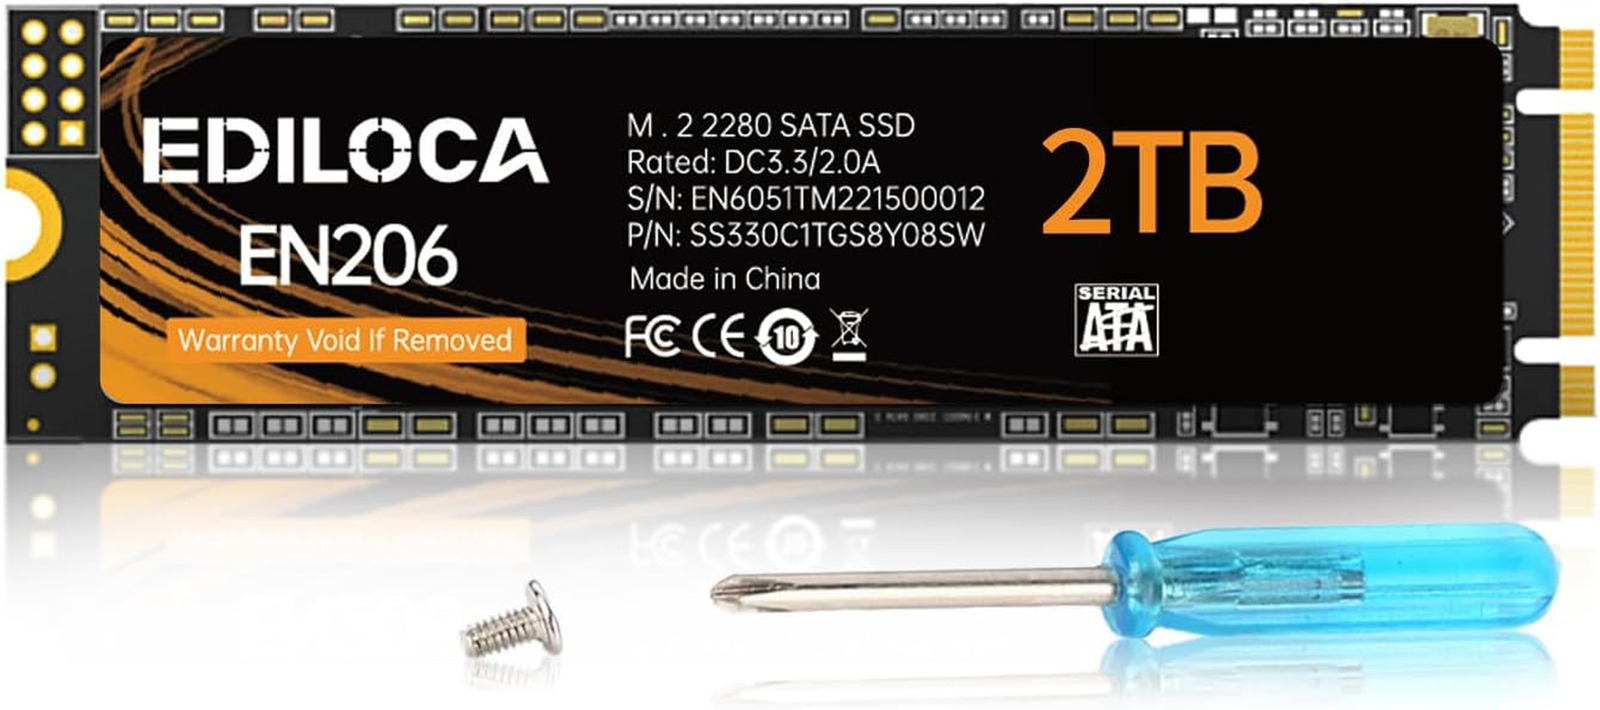 EN206 2TB SSD M.2 SATA 3D NAND TLC, M.2 2280 SATA III 6Gb/S SSD Internal Hard Dr